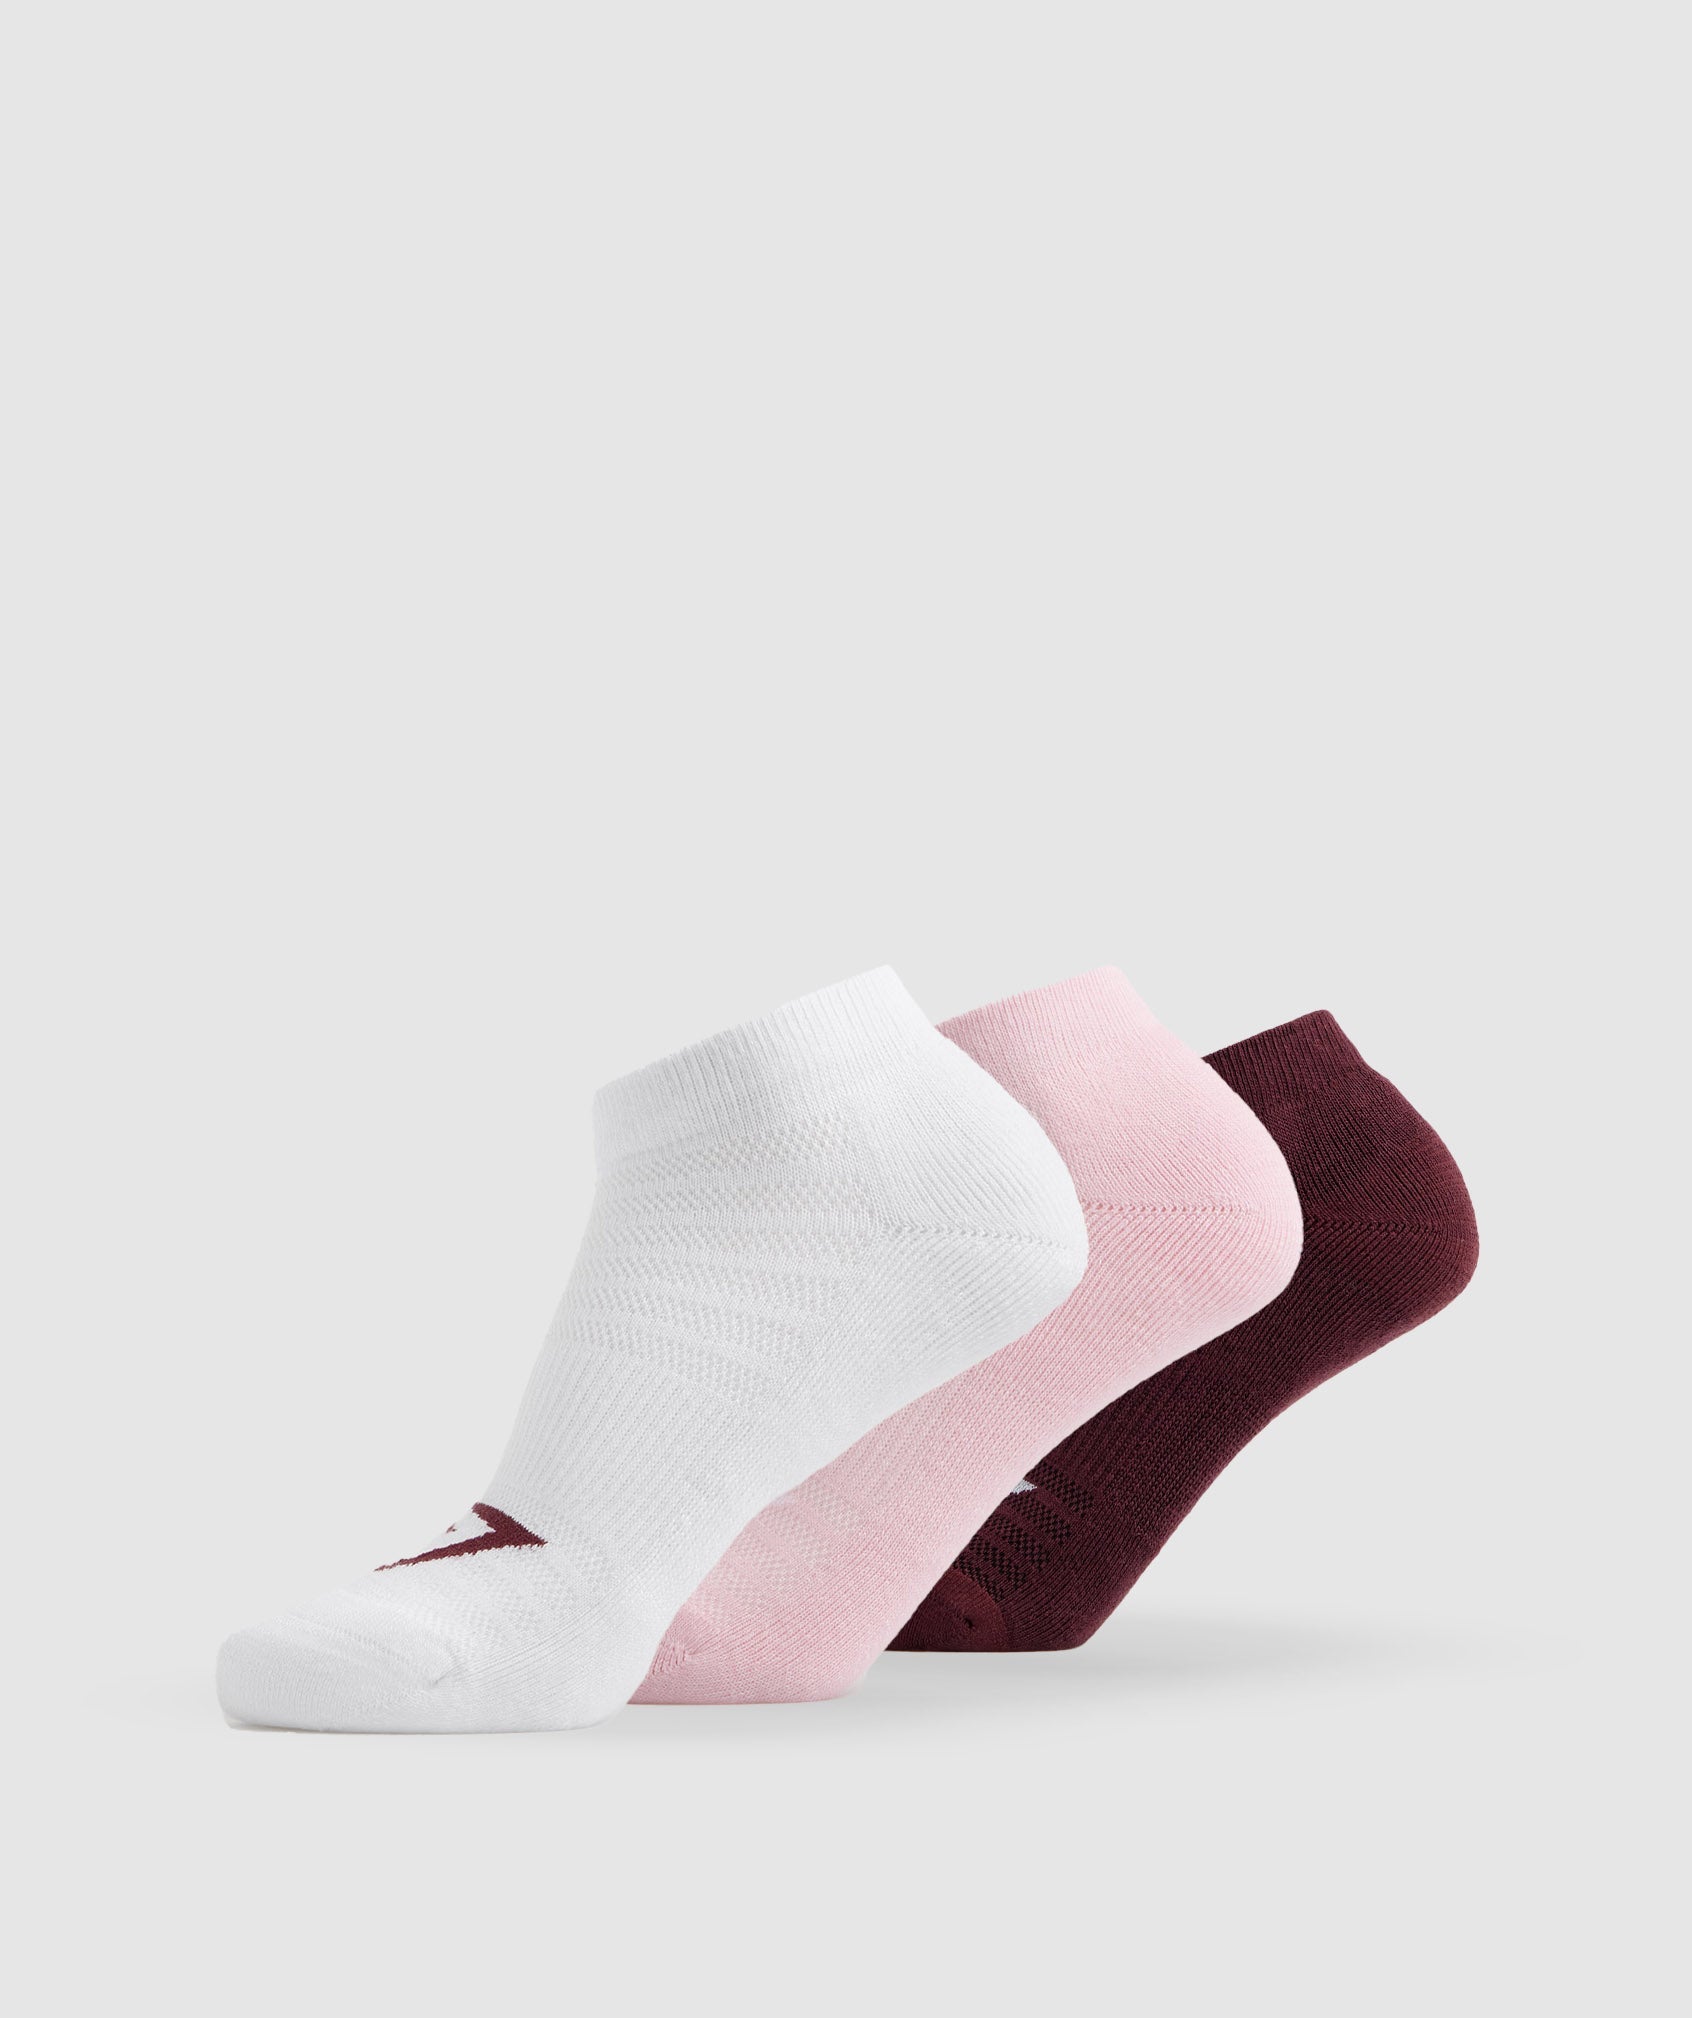 Trainer Socks 3pk in Baked Maroon/Sweet Pink/White - view 1